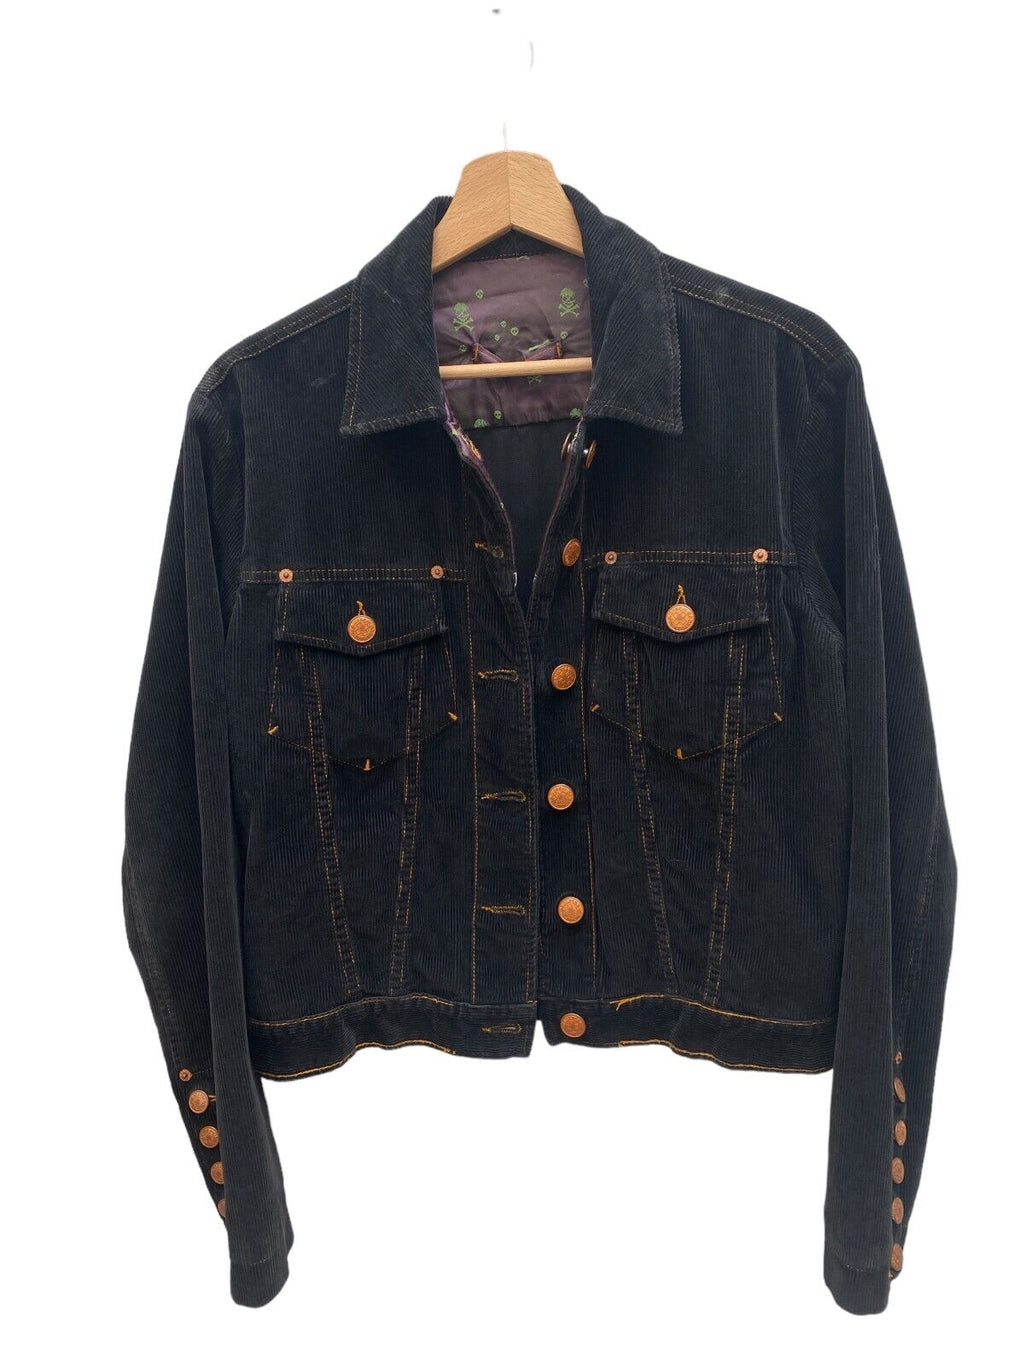 Vintage Reversible Black Corduroy Velvet Jacket Size Women M